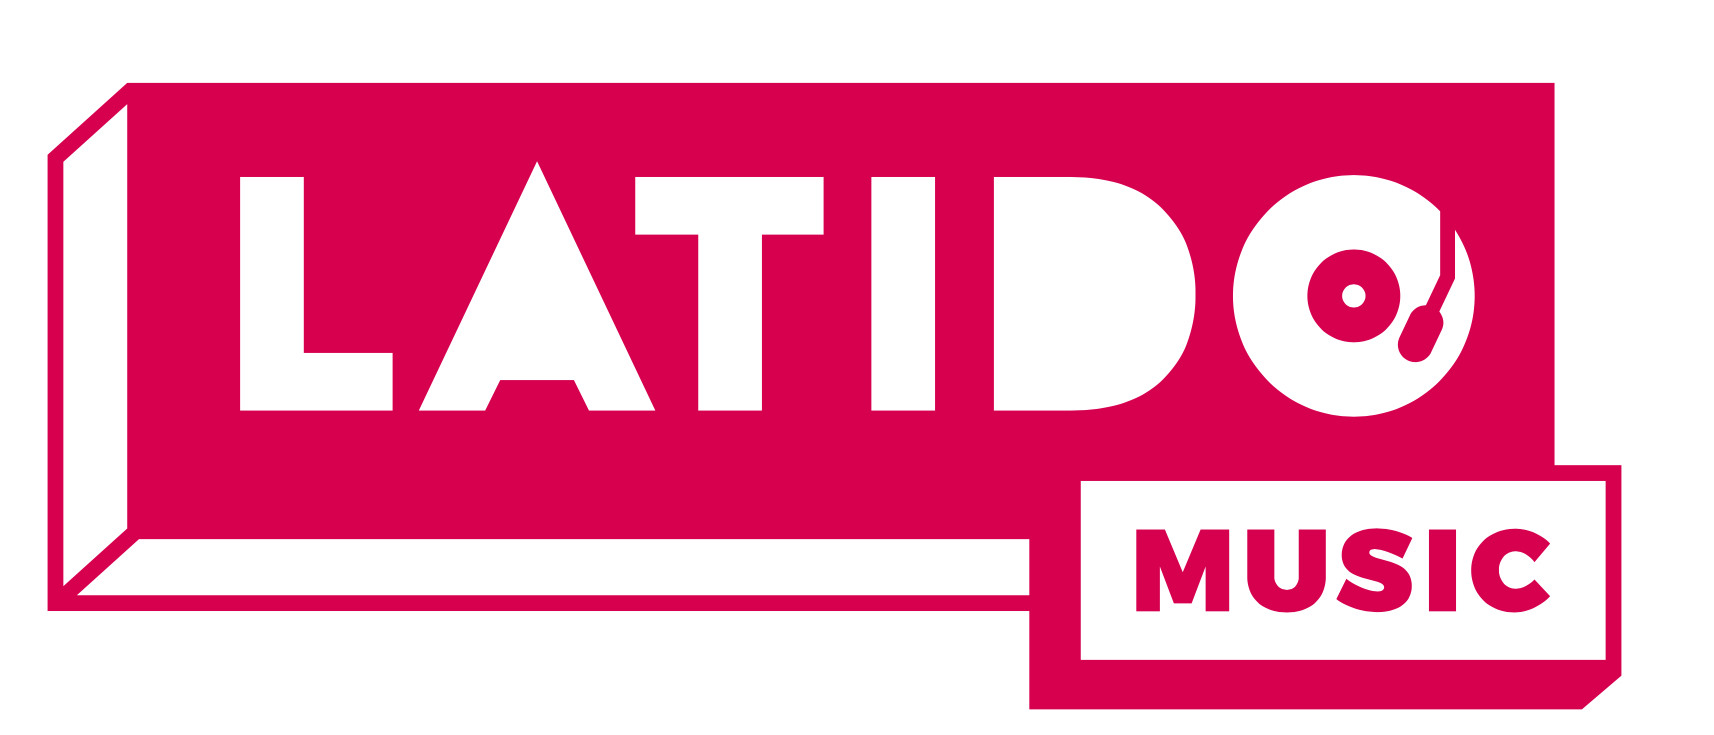 Latido Music logo